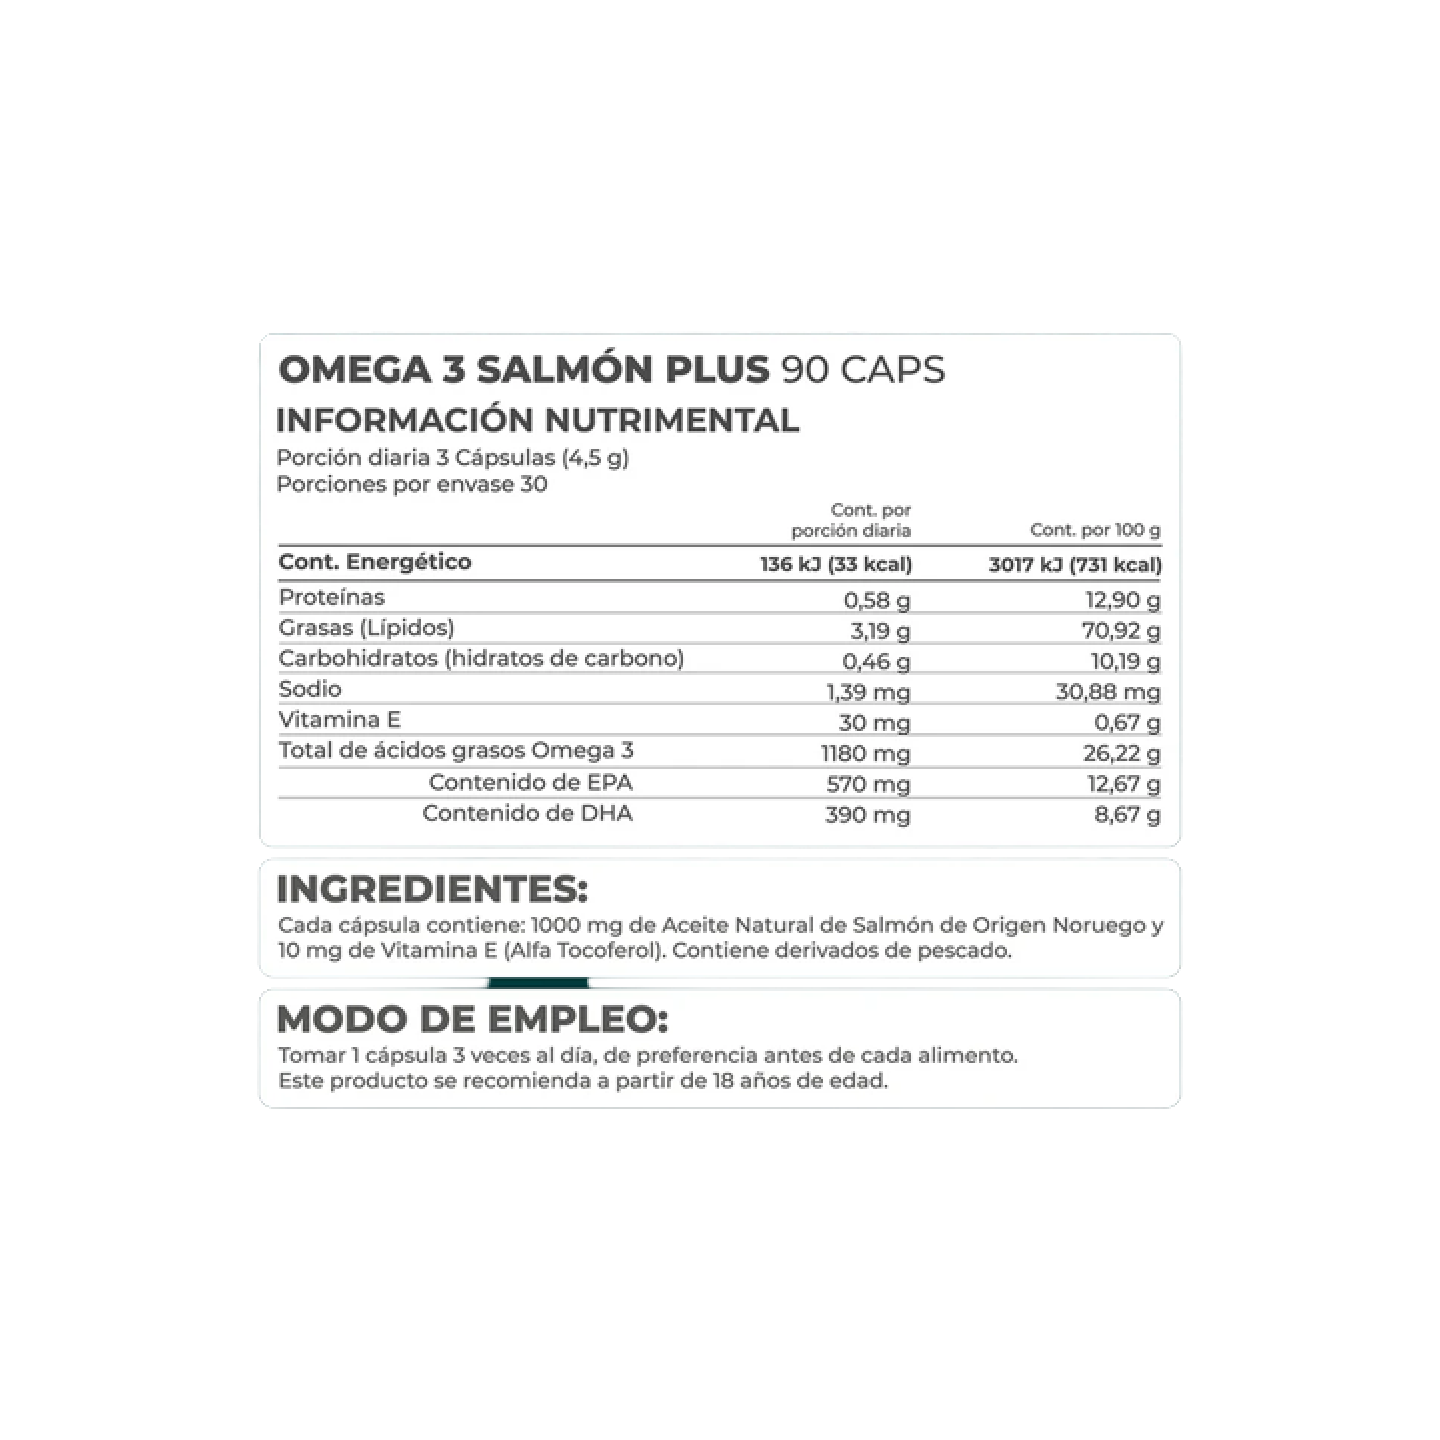 Salmón Plus (Omega 3) 90 cápsulas - Pronat